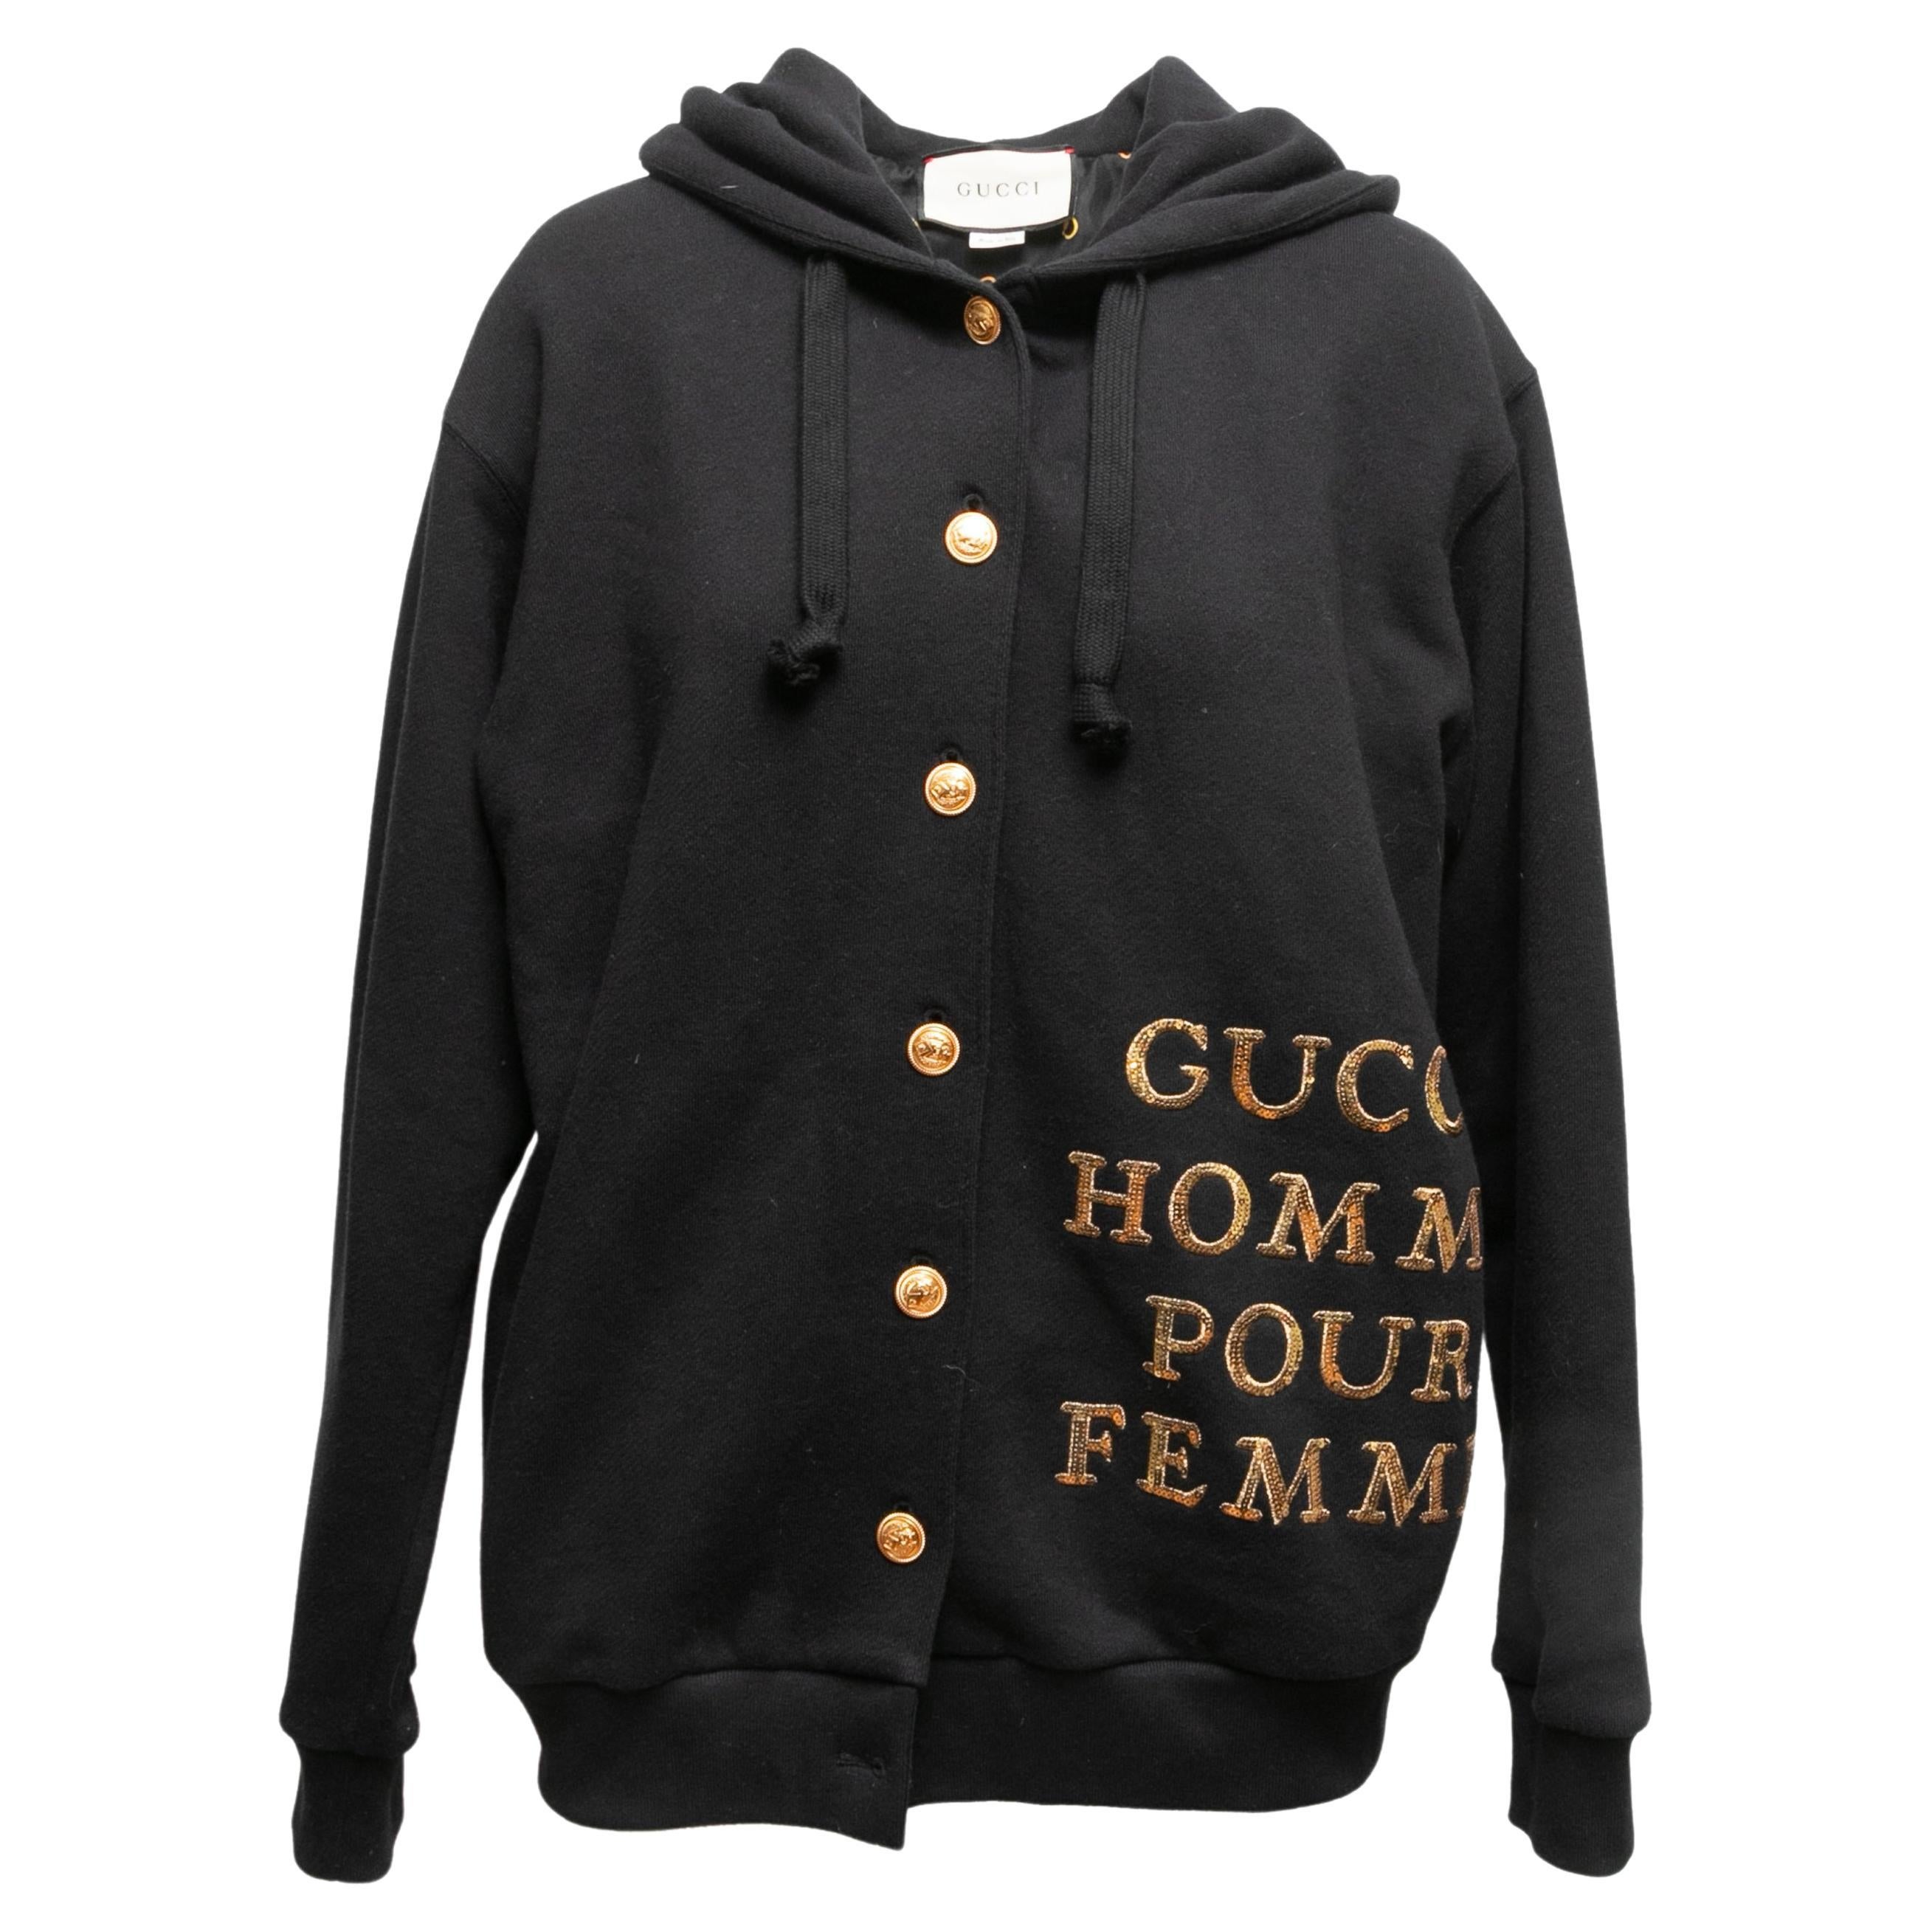 Gucci Super Rare Women’s Black embellished “Homme Pour Femme” Hoodie size L